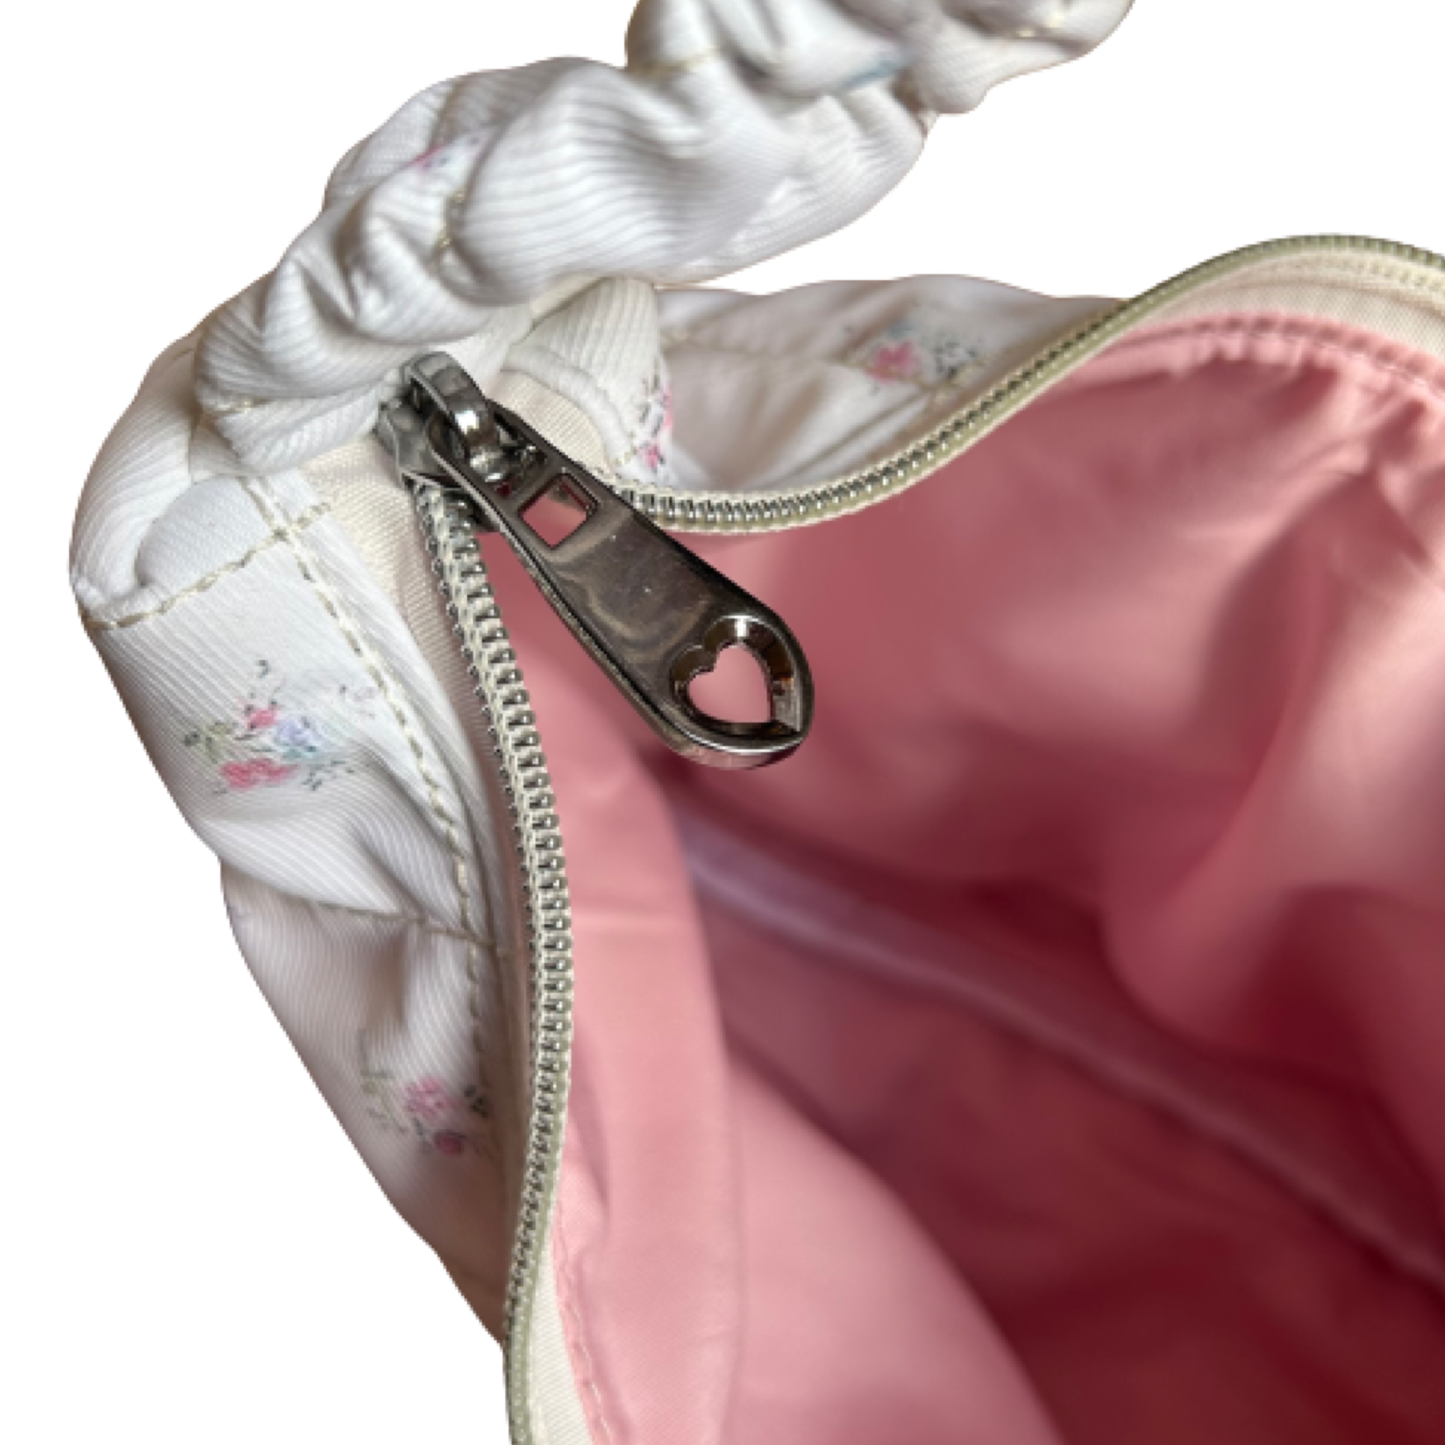 small cotton candy flower shoulder bag